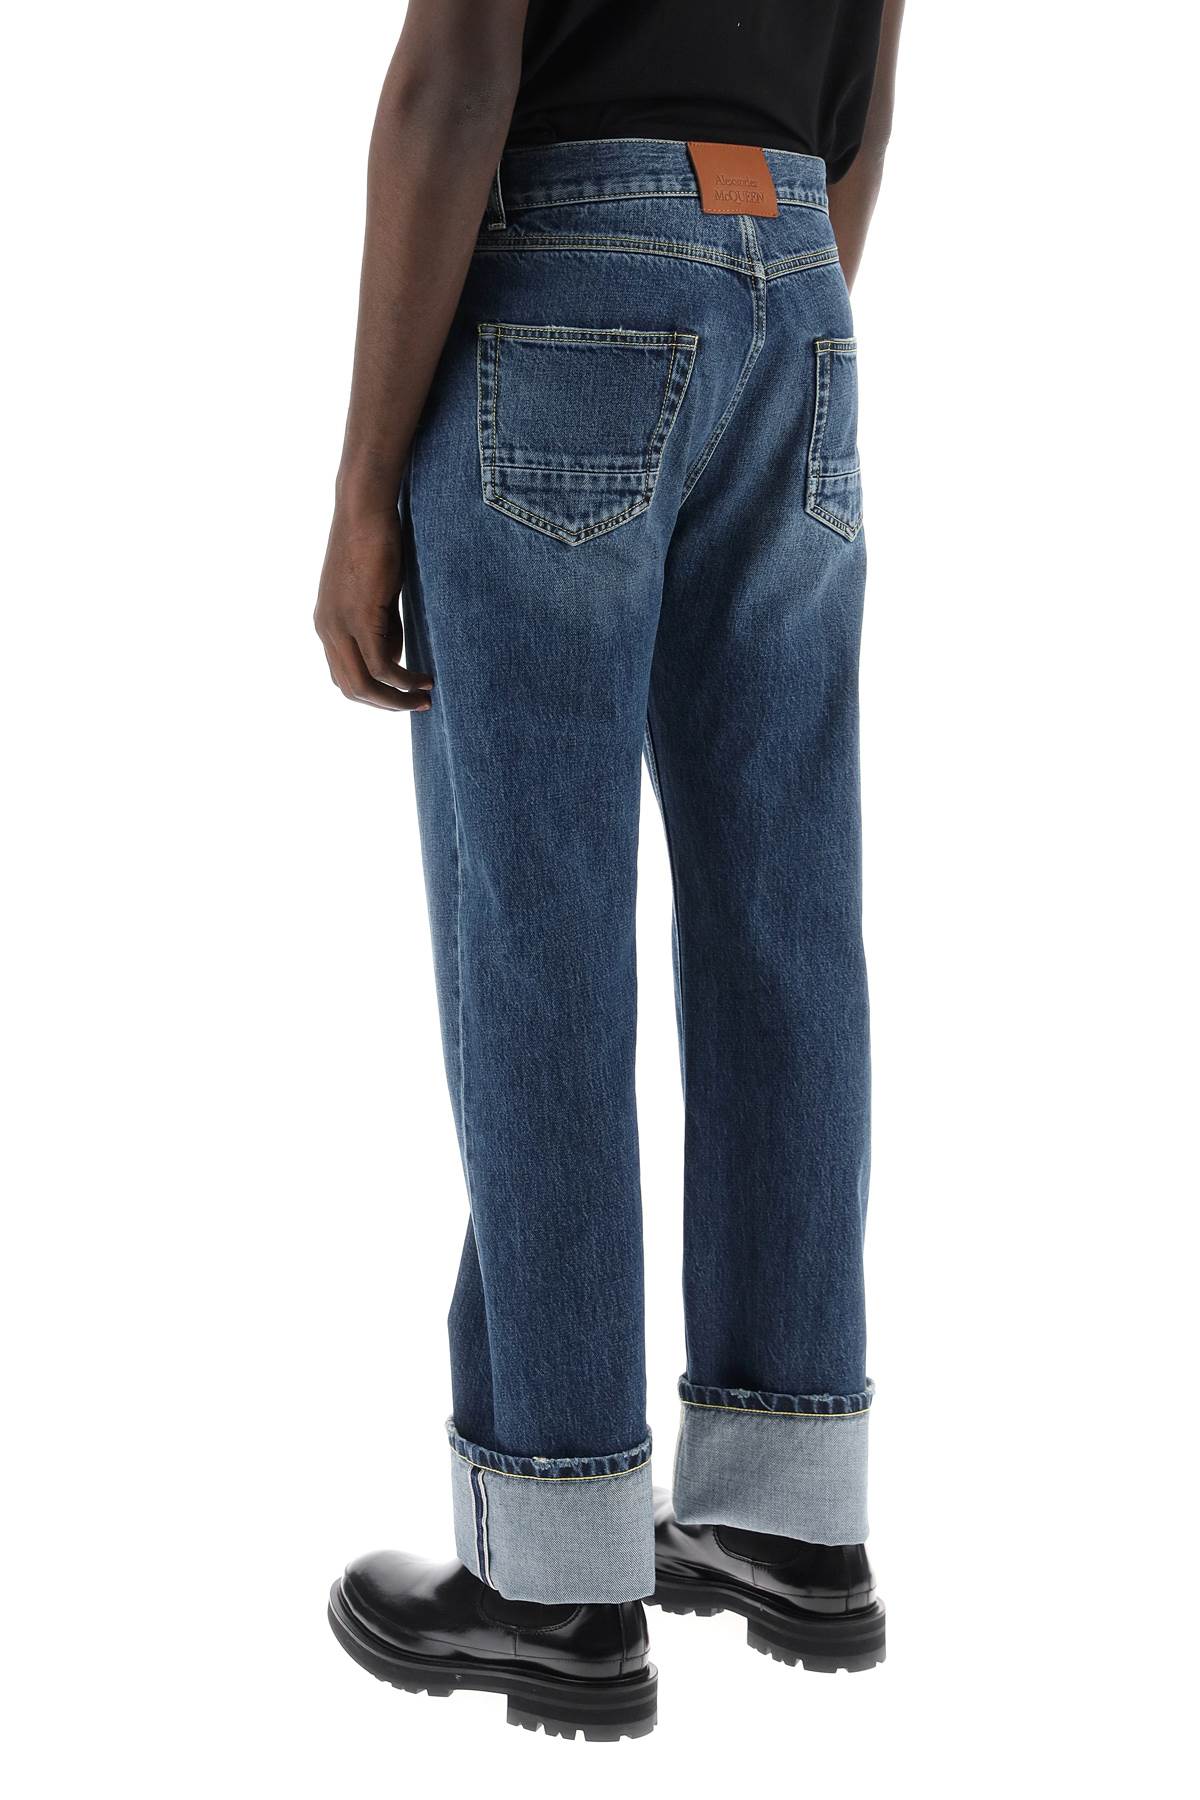 Alexander mcqueen straight fit jeans in selvedge denim-2